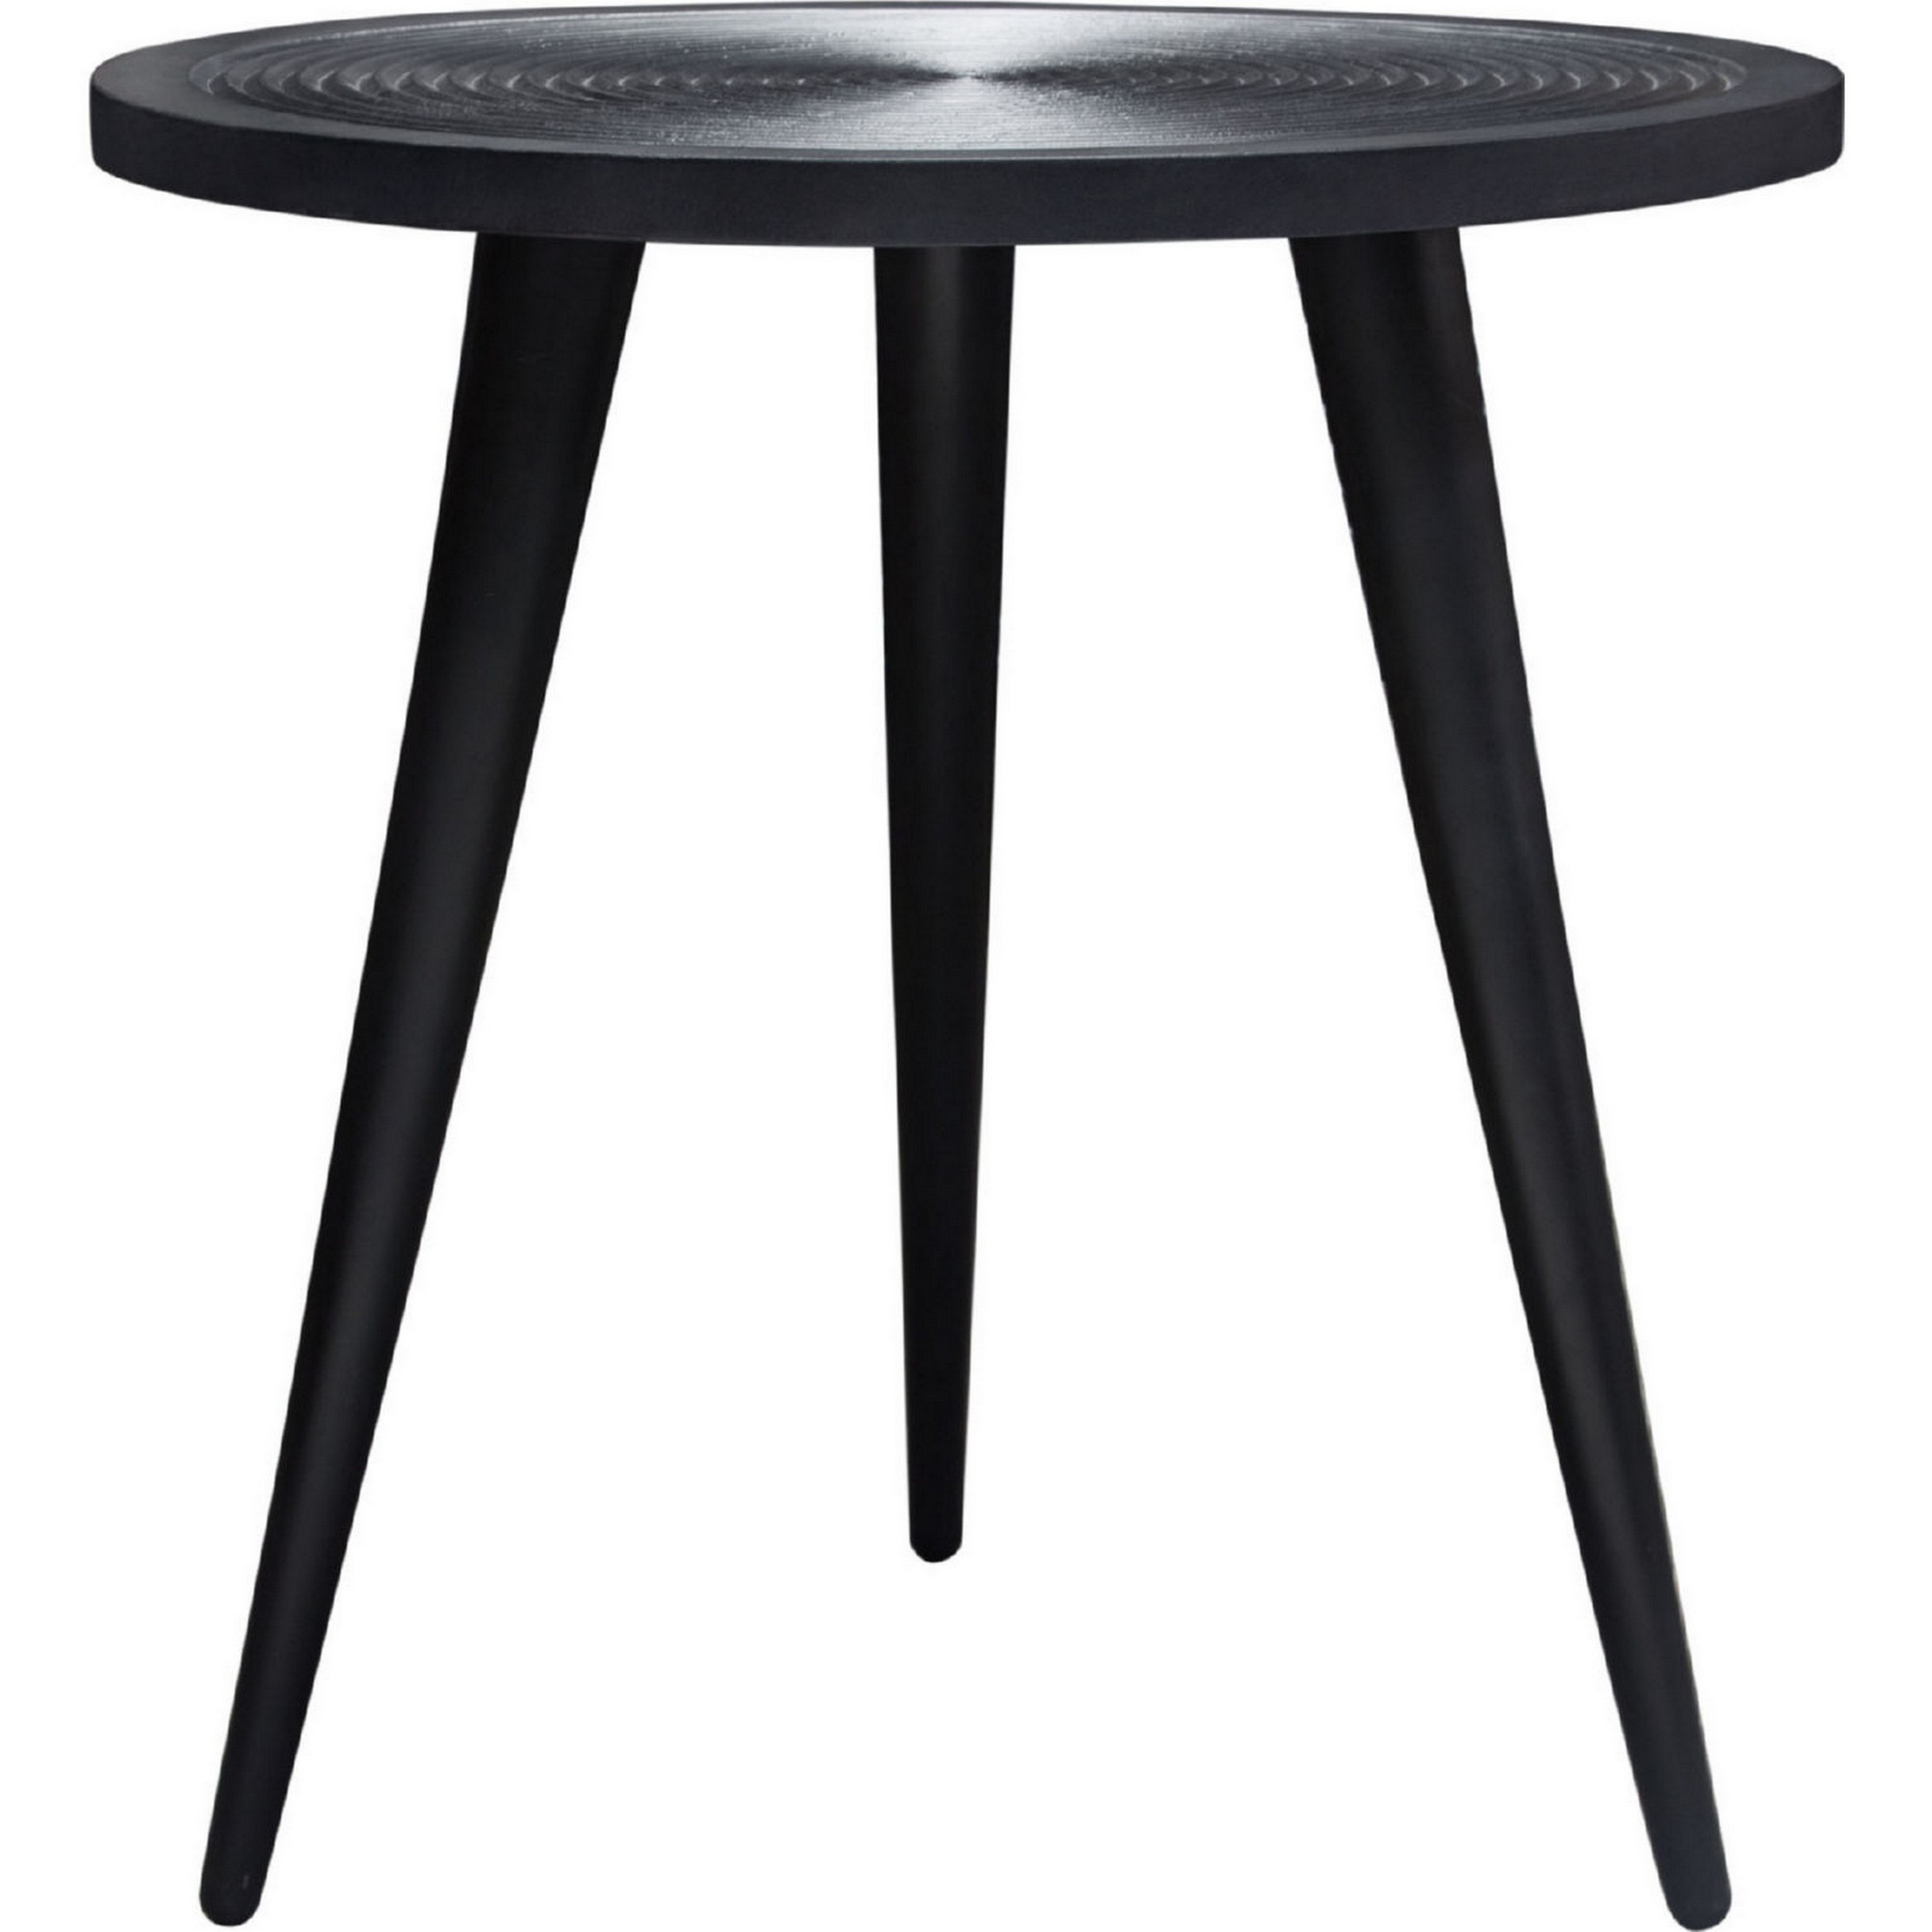 Vio 24 Inch Round Side End Table, Embossed Surface Patterning, Black Wood- Saltoro Sherpi